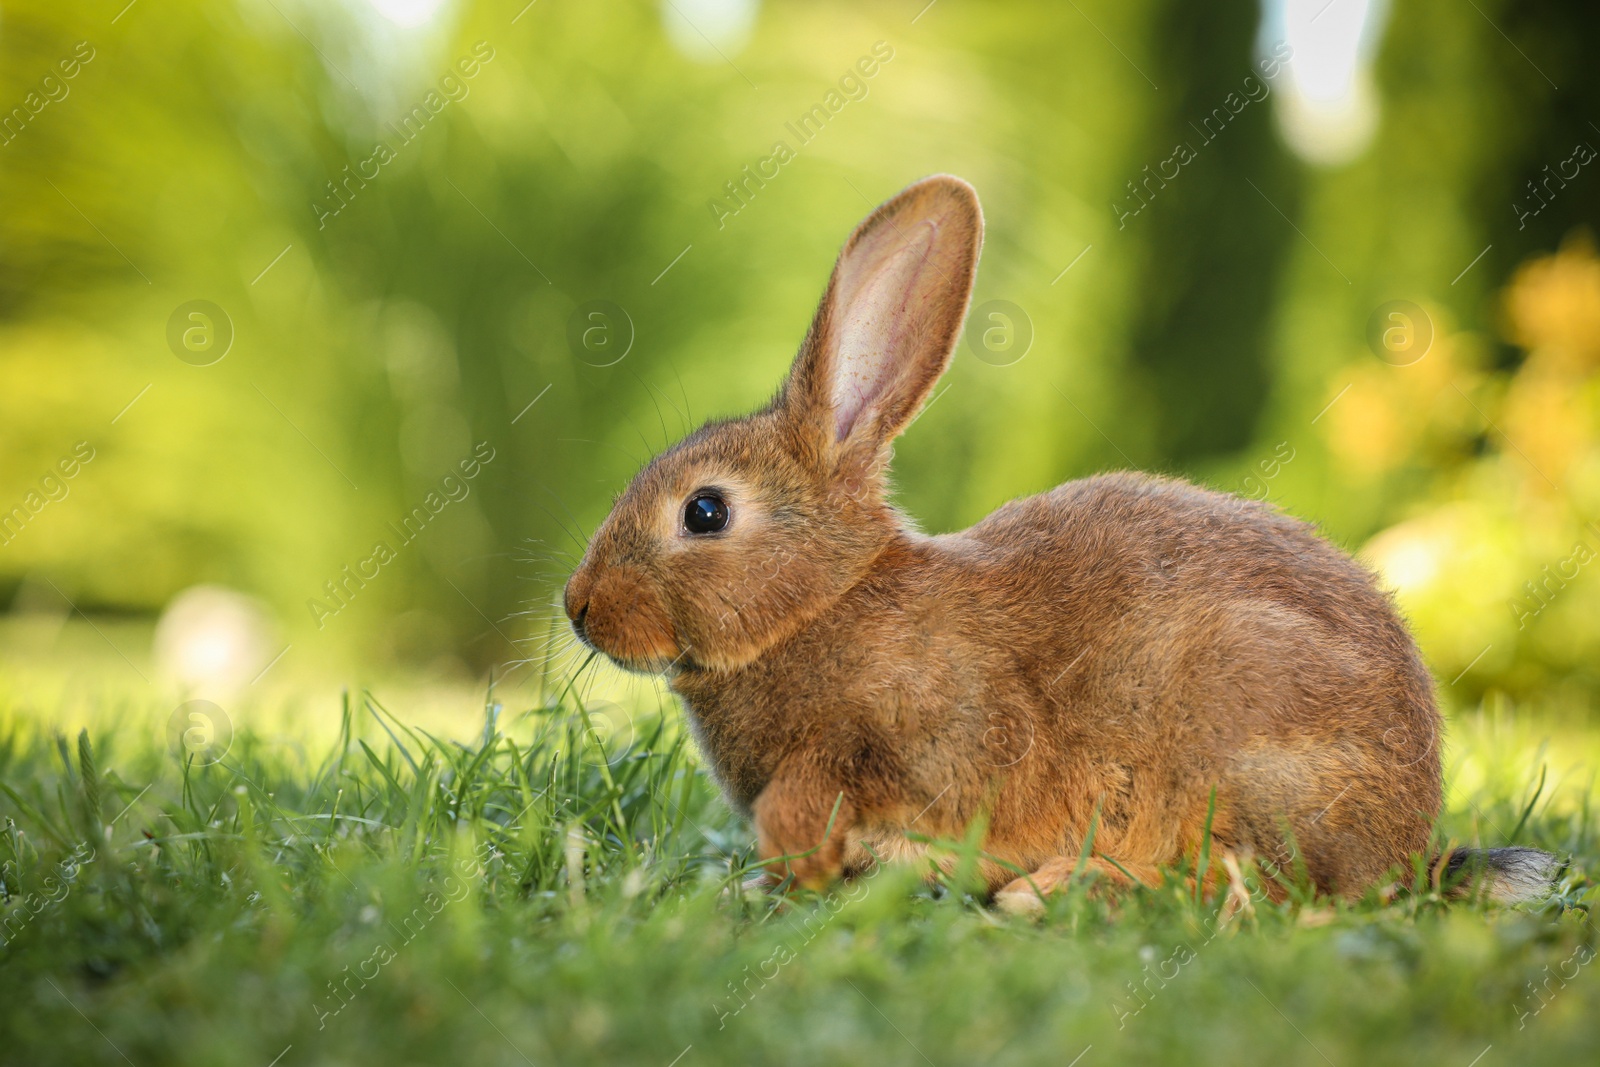 Photo of Cute fluffy rabbit on green grass outdoors